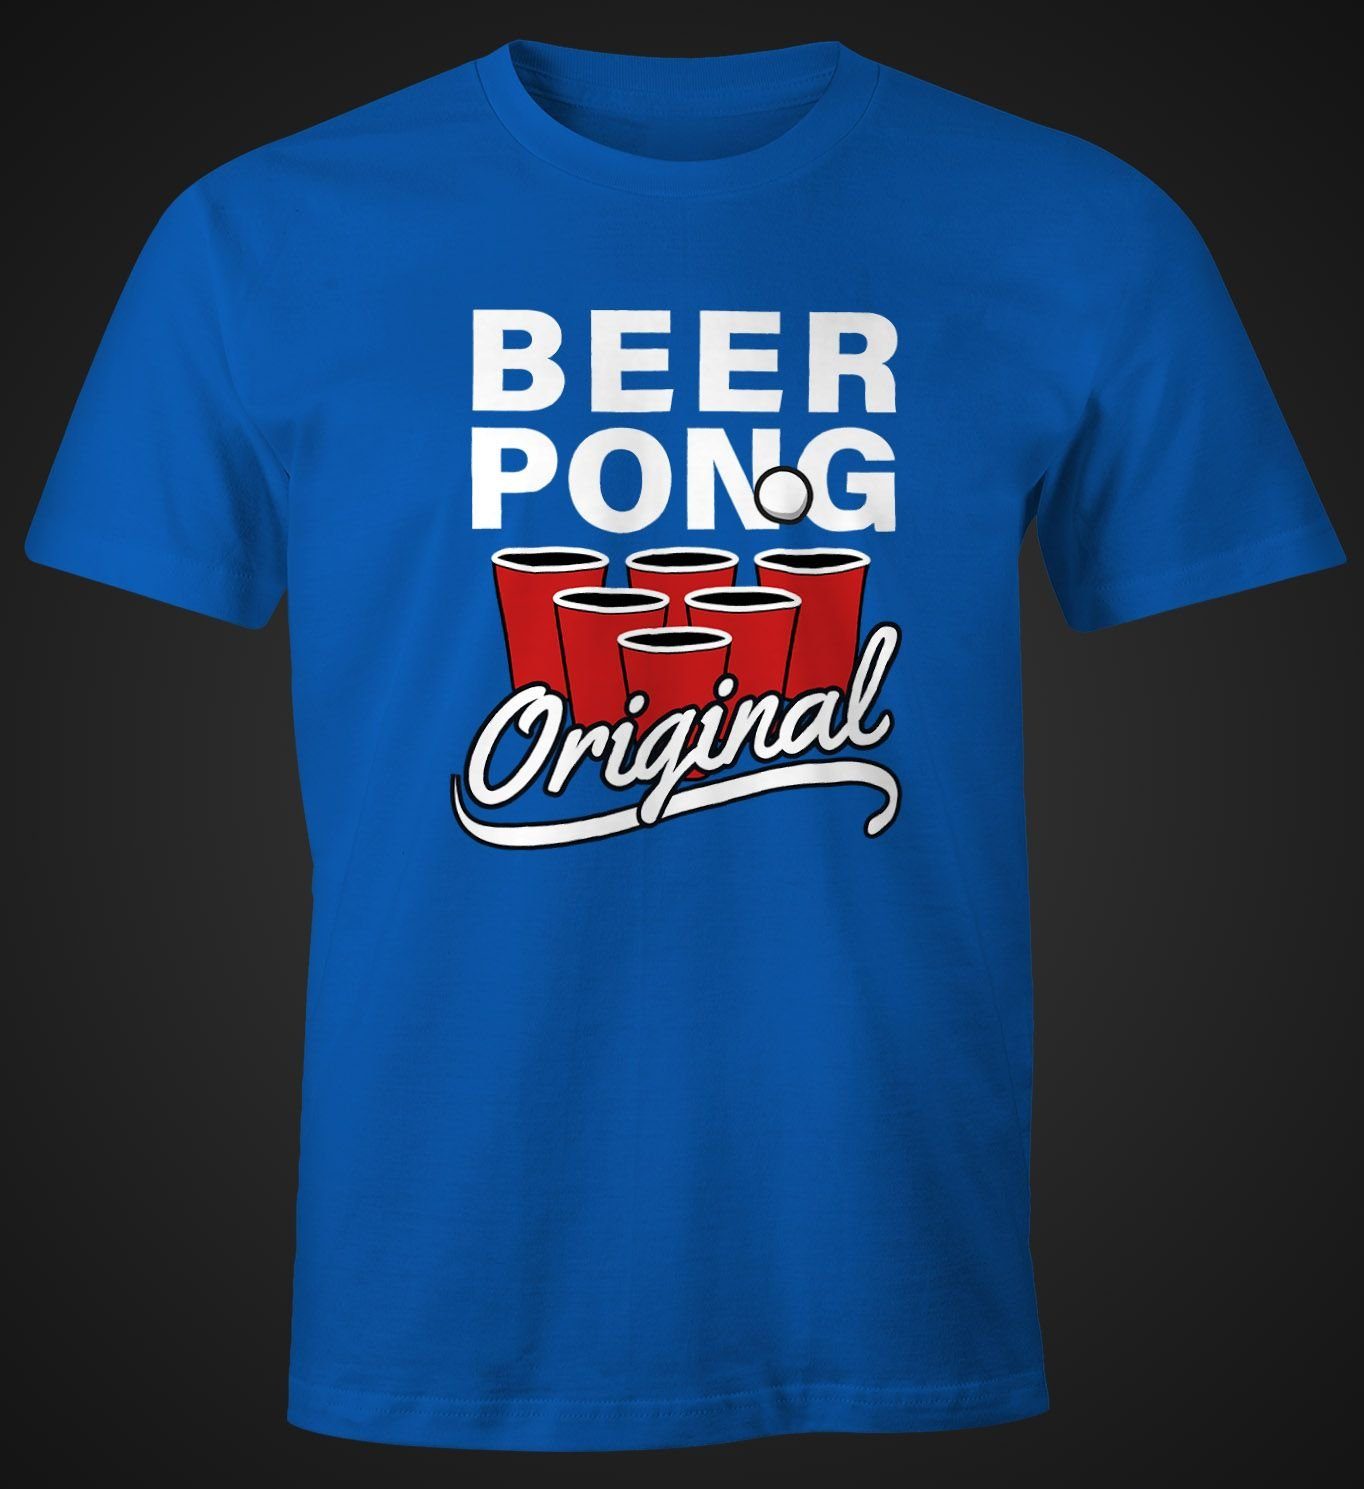 MoonWorks Print-Shirt Herren T-Shirt Beer Print Original Bier mit Pong blau Moonworks® Fun-Shirt